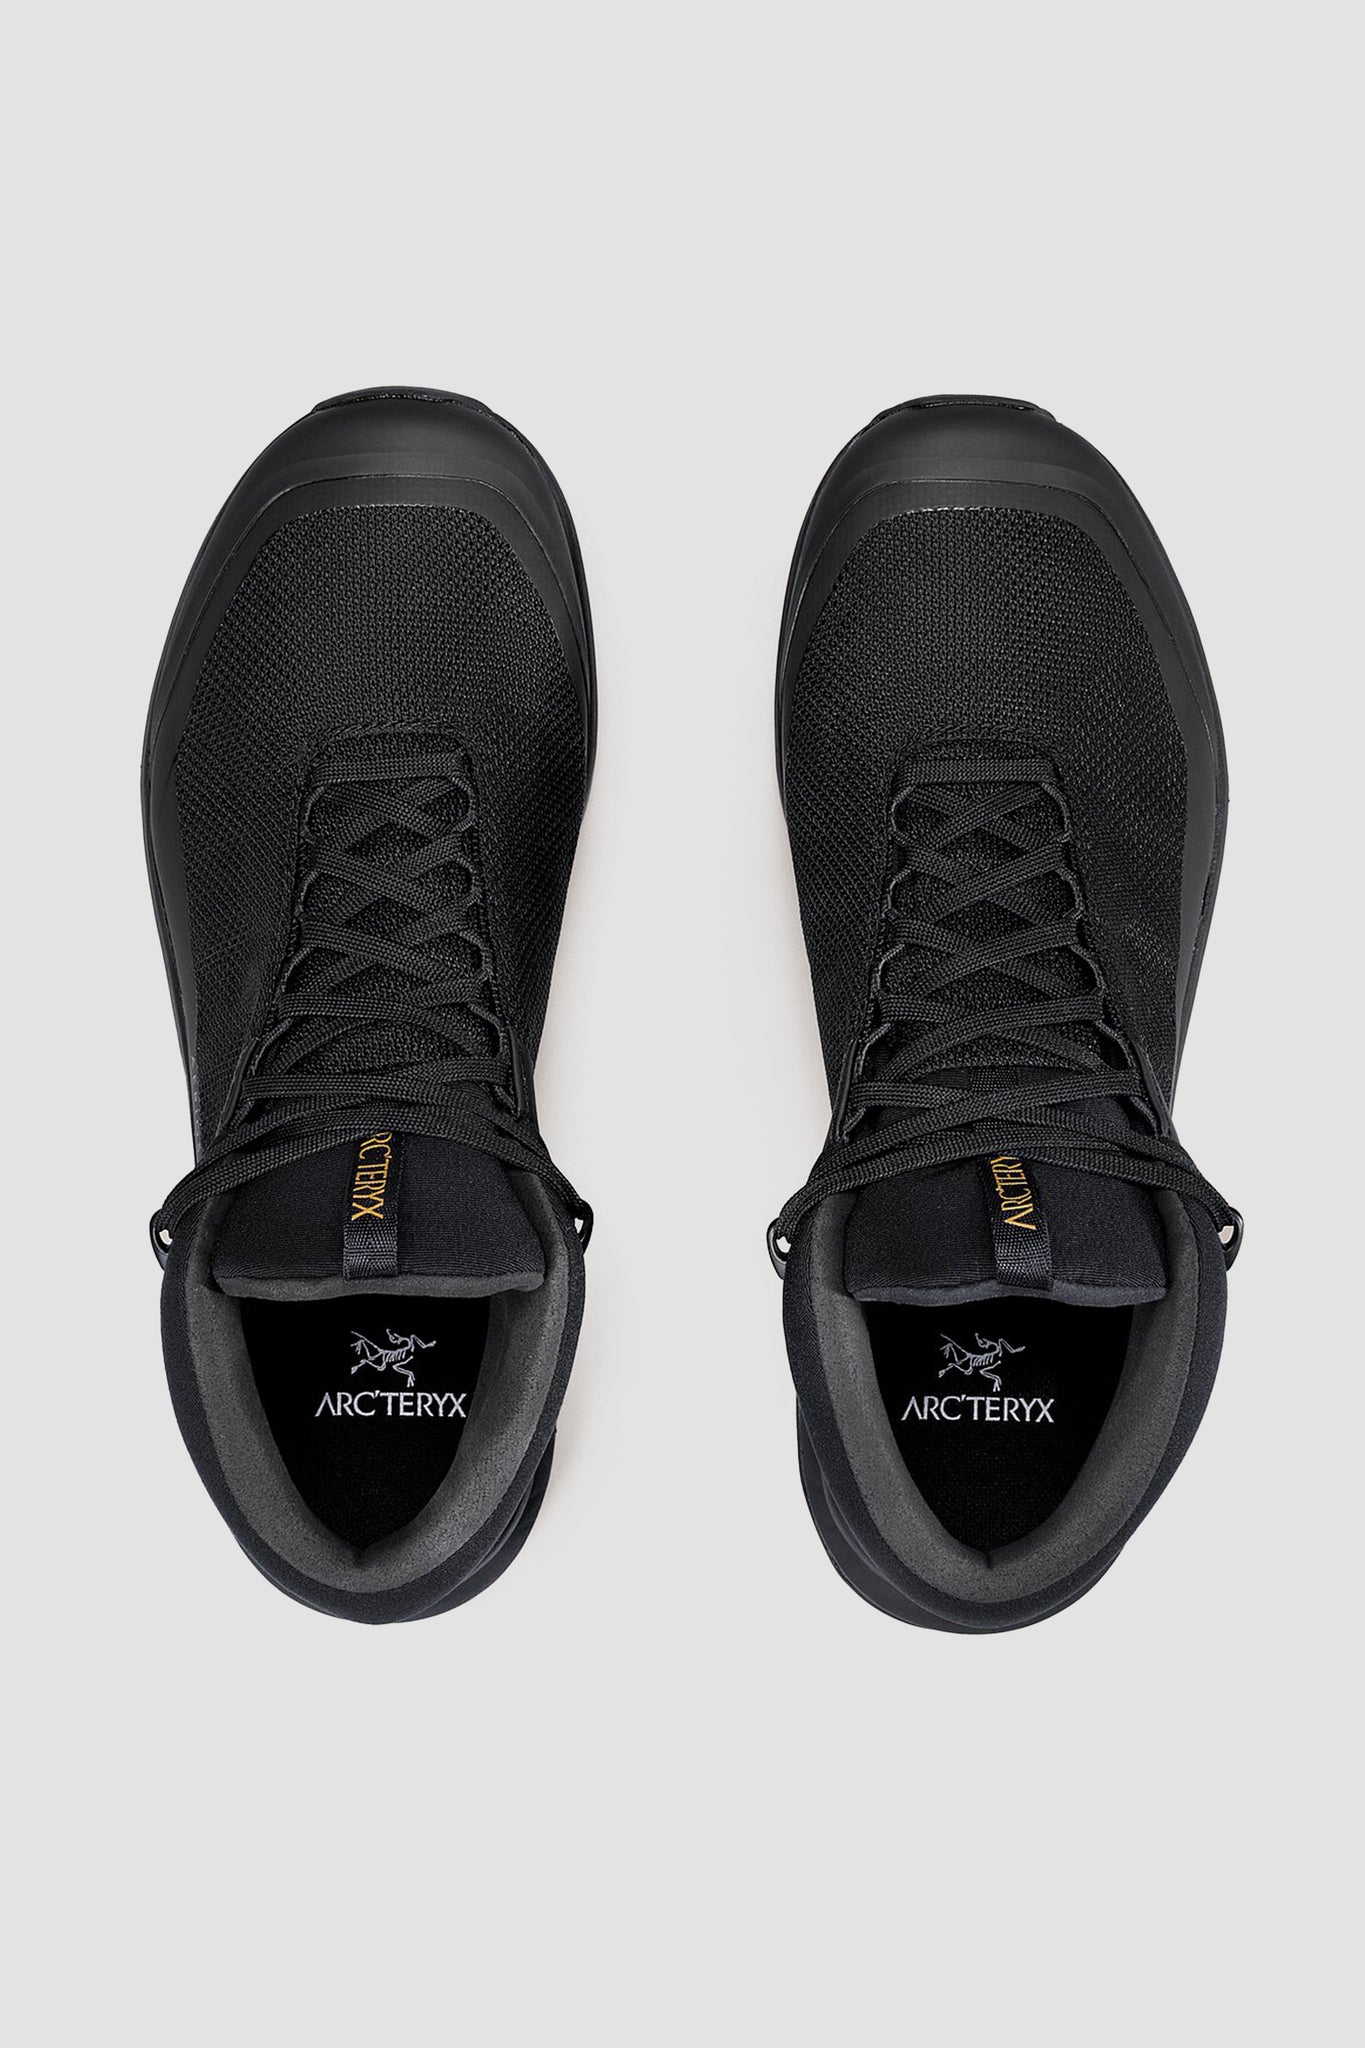 Arc'teryx Women's Aerios Mid GTX Shoe in Black/Black